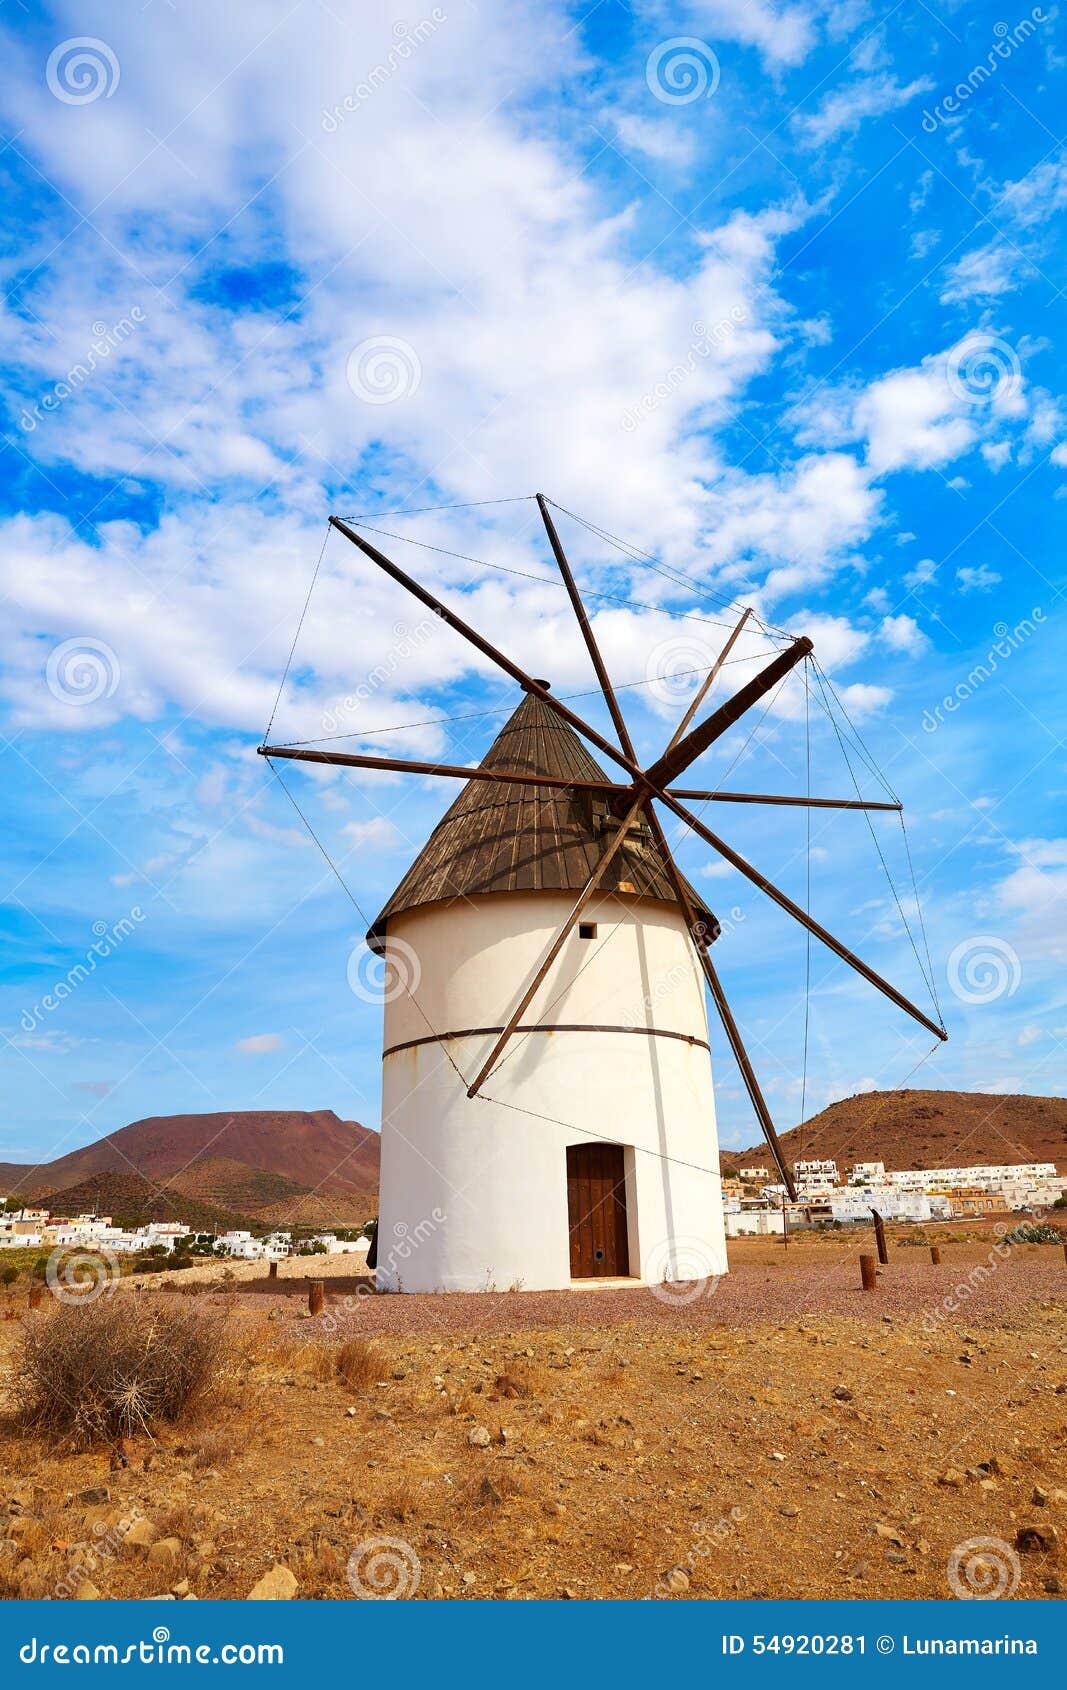 almeria molino pozo de los frailes windmill spain